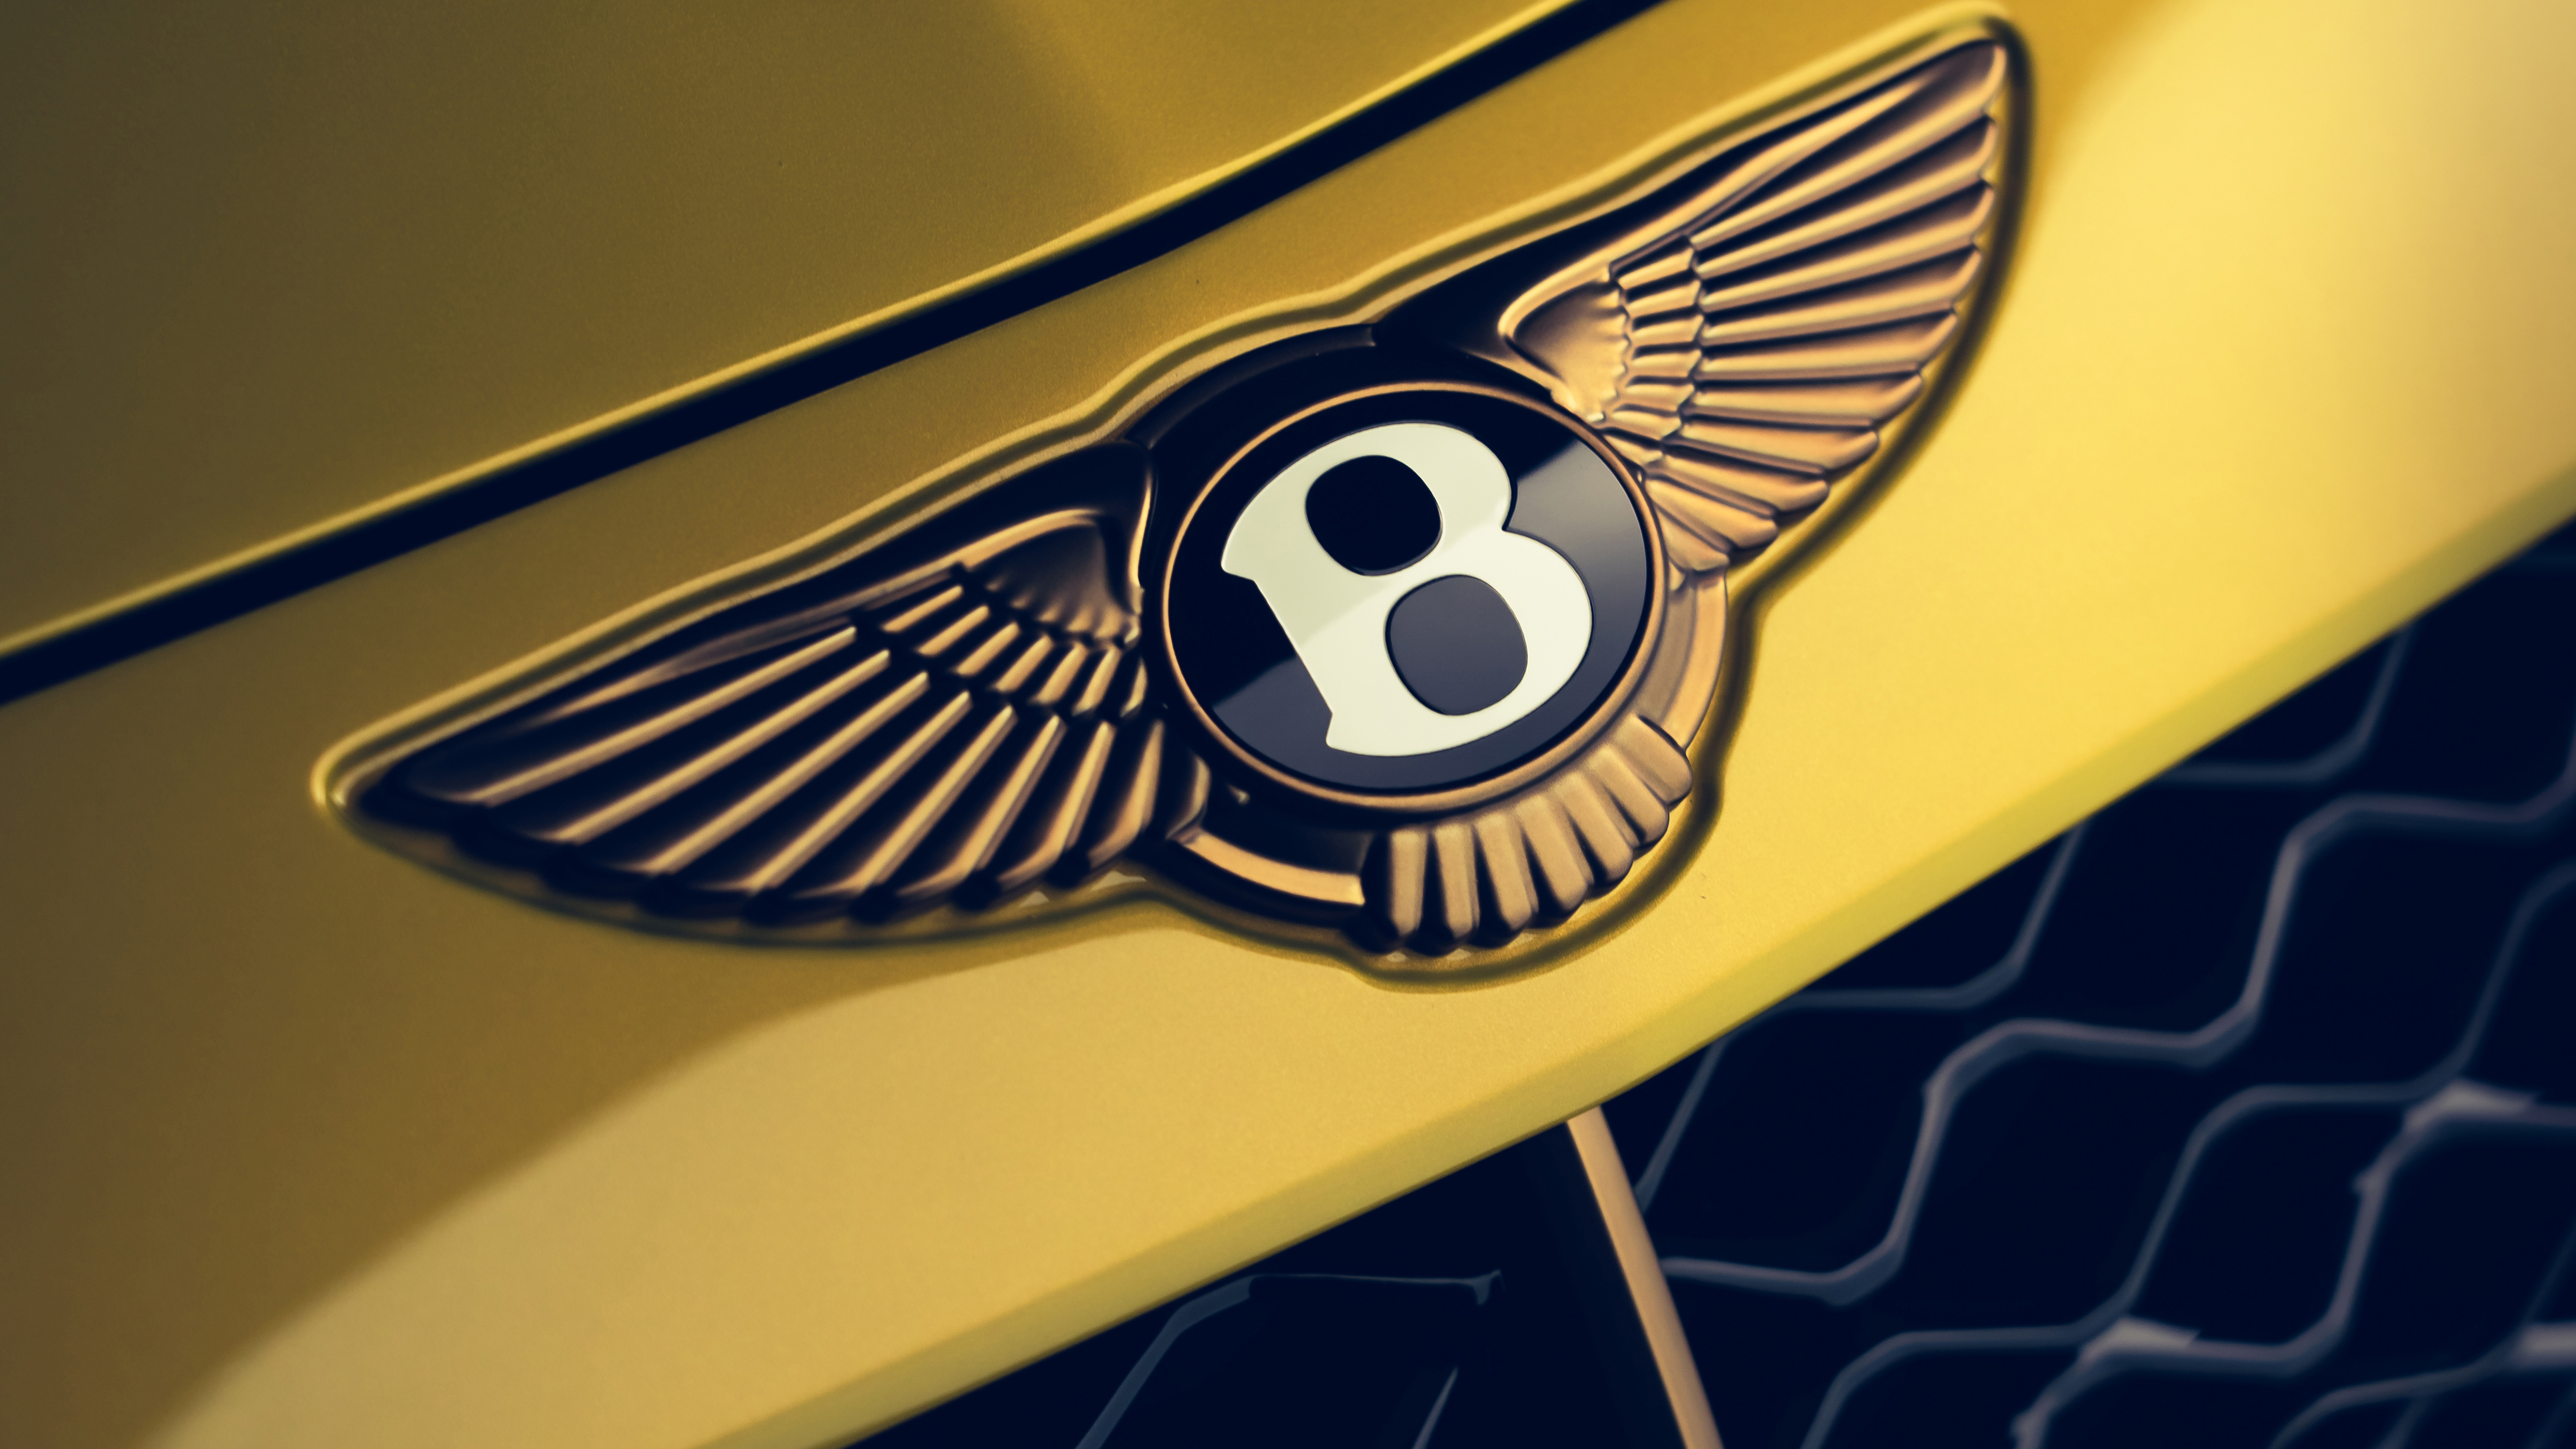 General 5120x2880 Bentley Mulliner Bacalar Bentley logo car vehicle closeup wings British cars Volkswagen Group